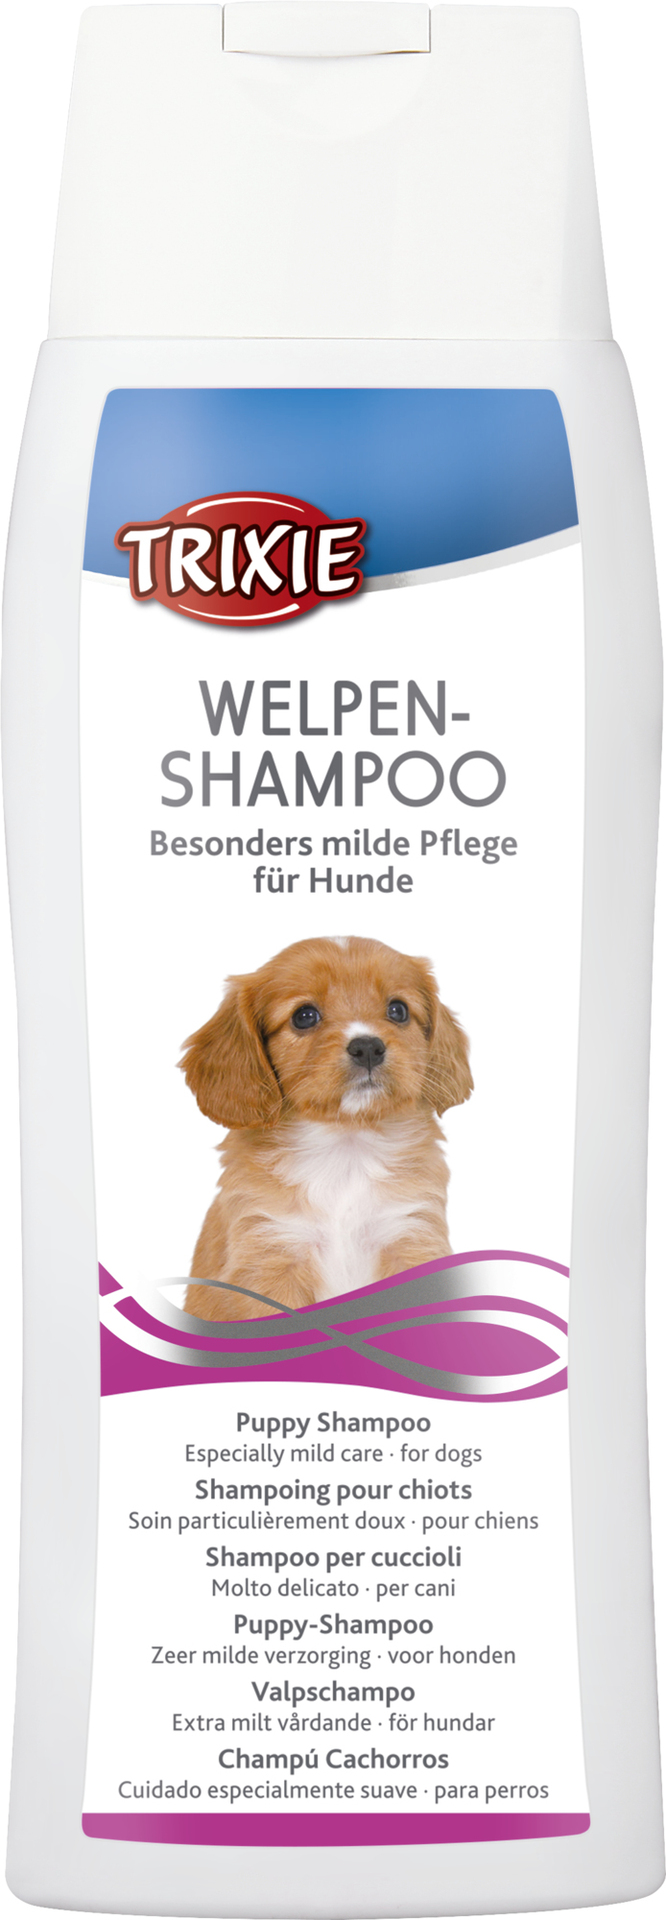 TRIXIE Welpen-Shampoo